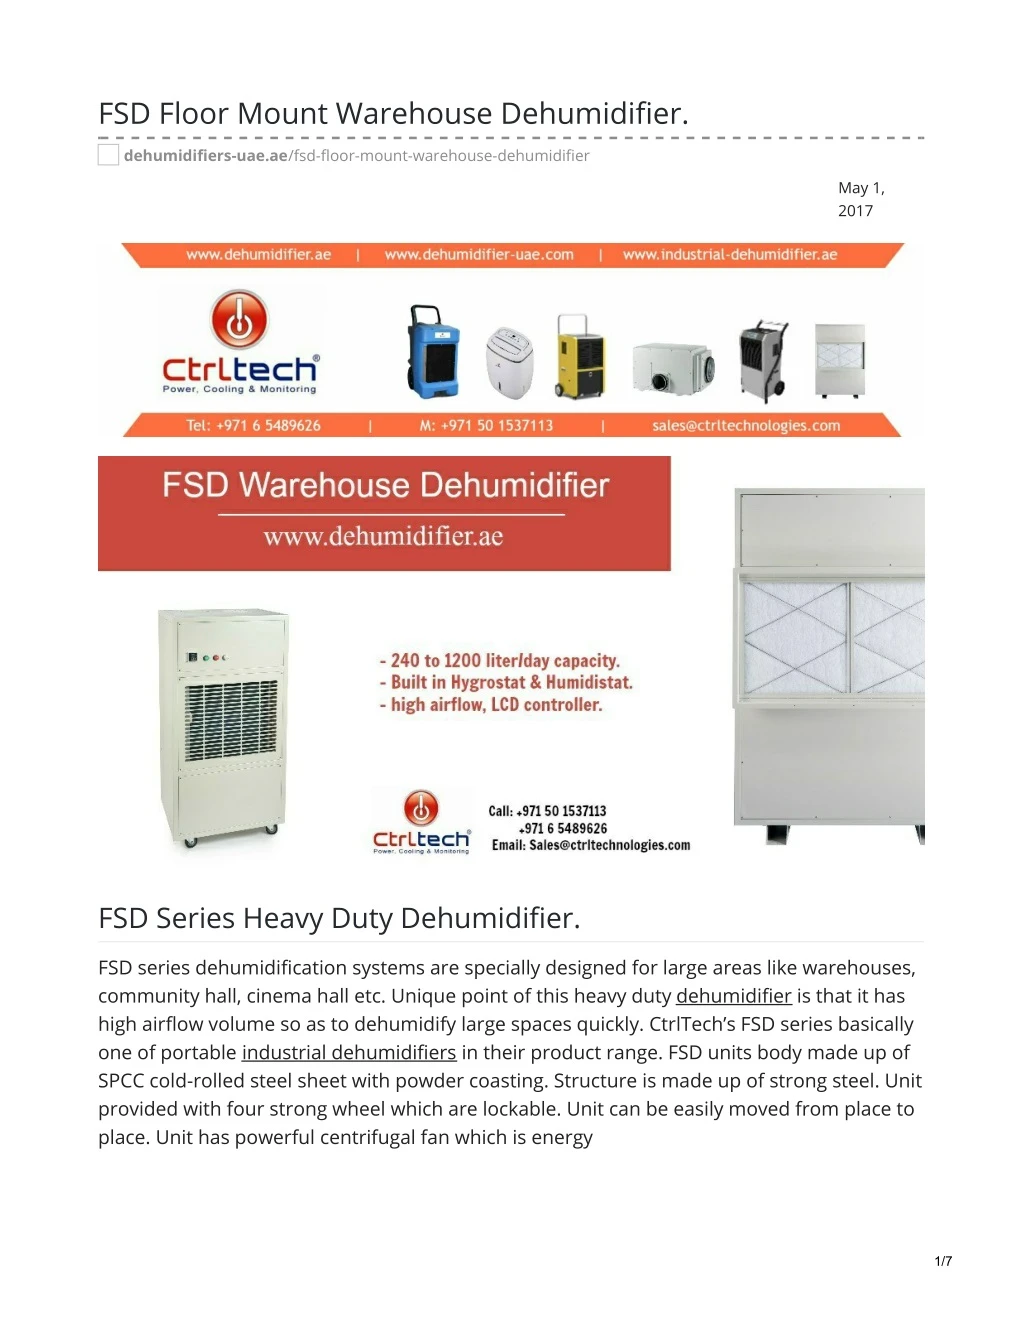 fsd floor mount warehouse dehumidifier